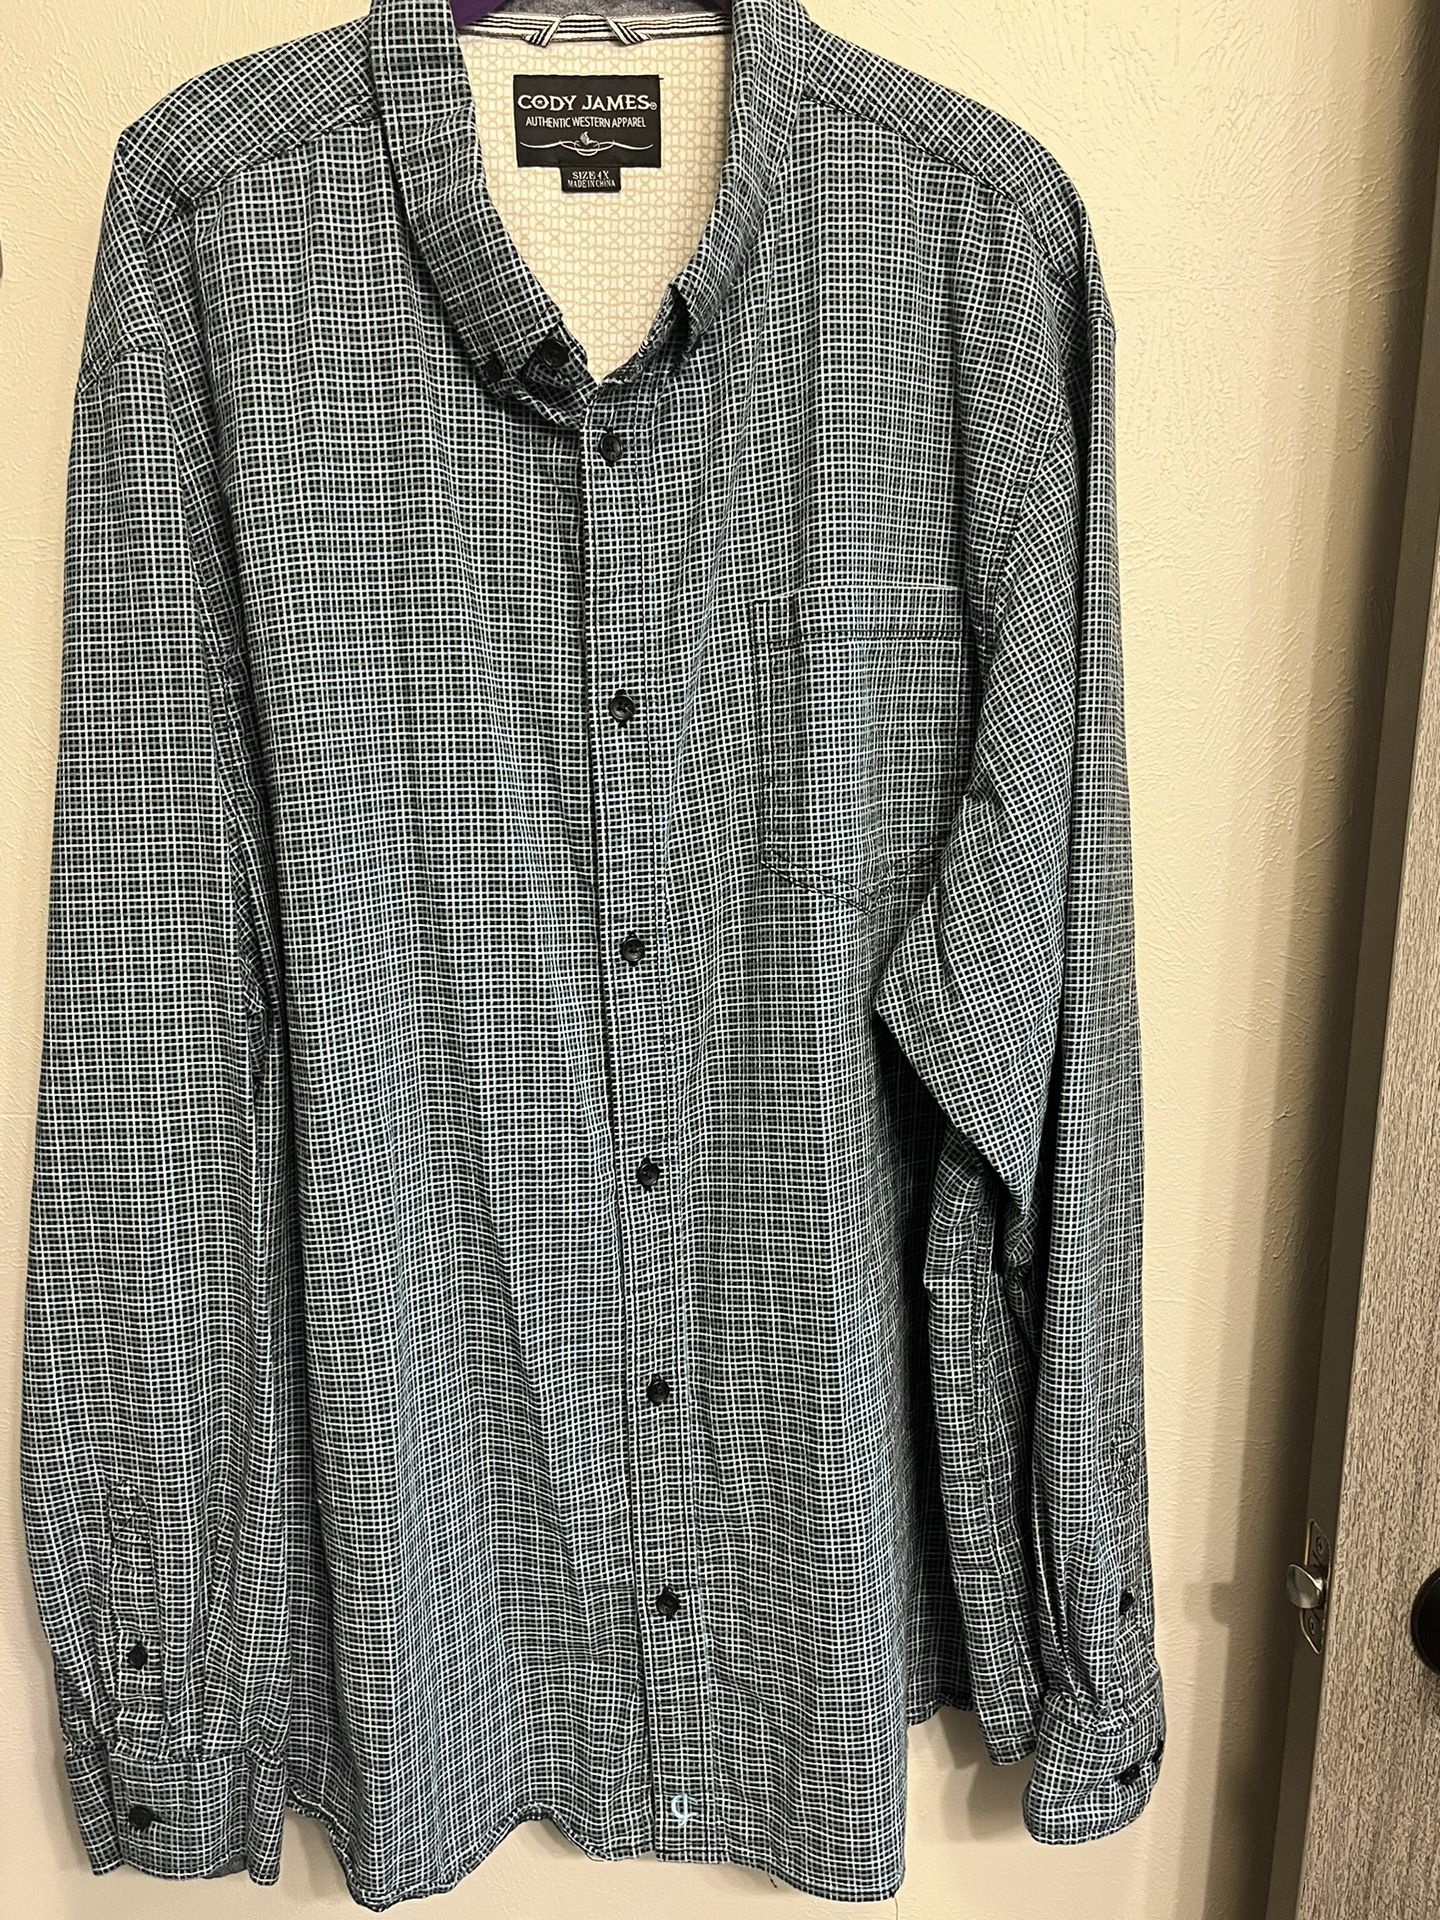 Cody James Men’s Button Up Long Sleeve Western Shirt Size 4 X